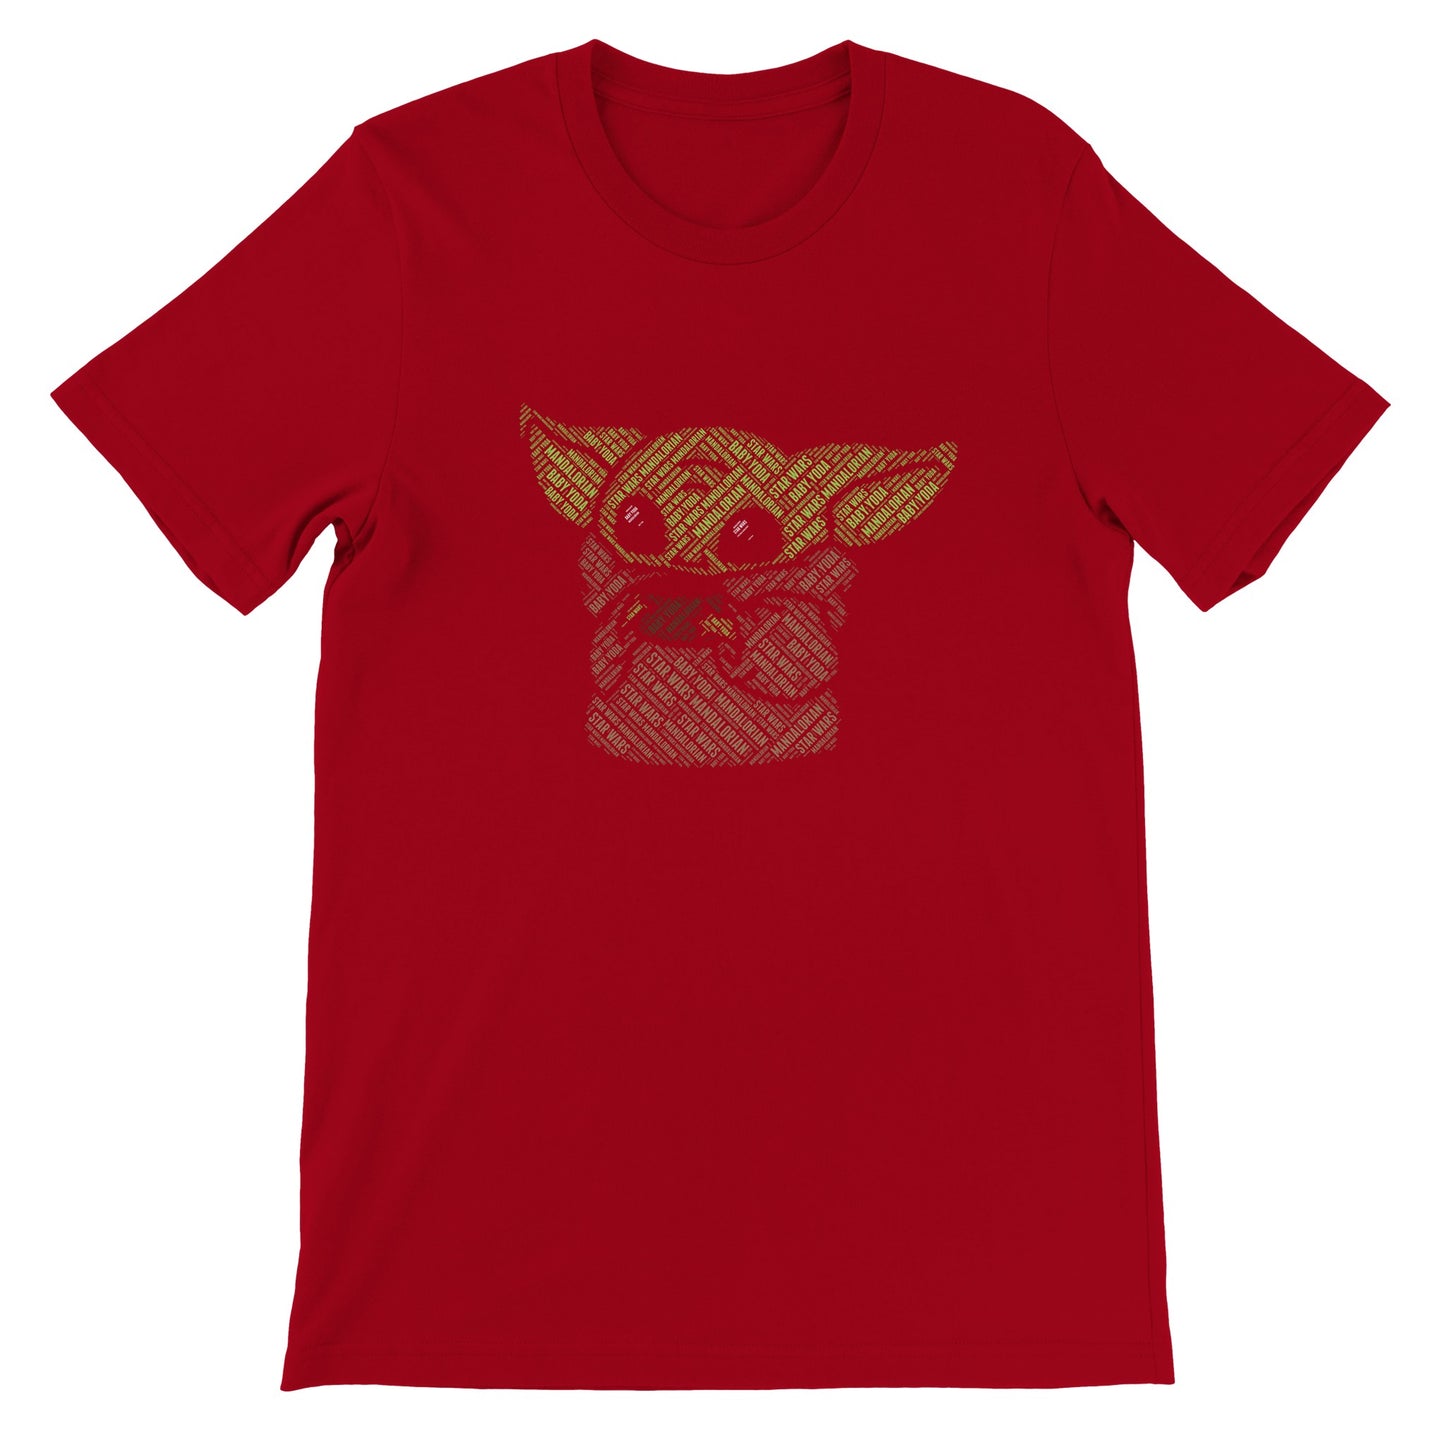 Artwork T-shirt - Baby Yoda Kalligram Artwork - Premium Unisex T-shirt 